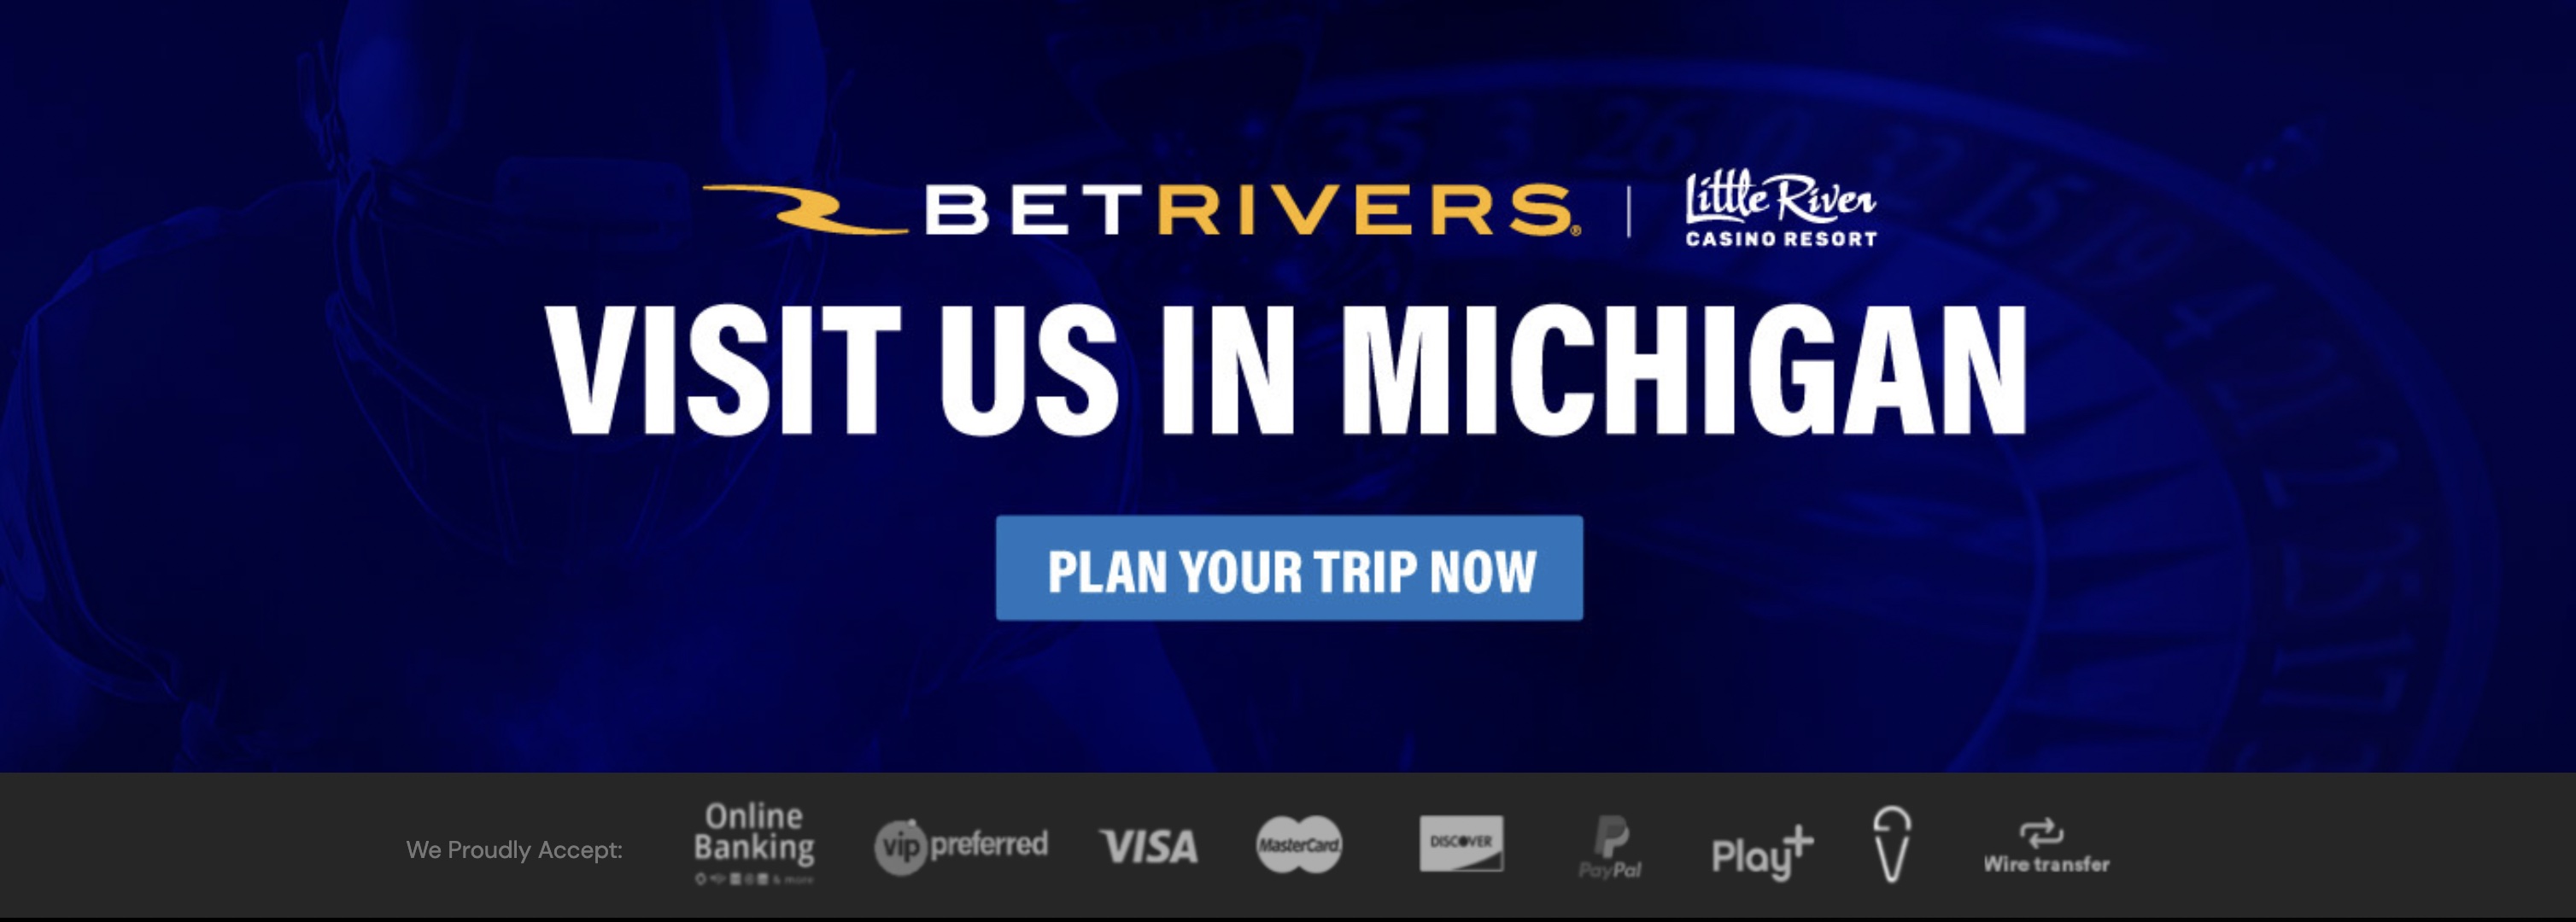 Betrivers casino promo code bonus